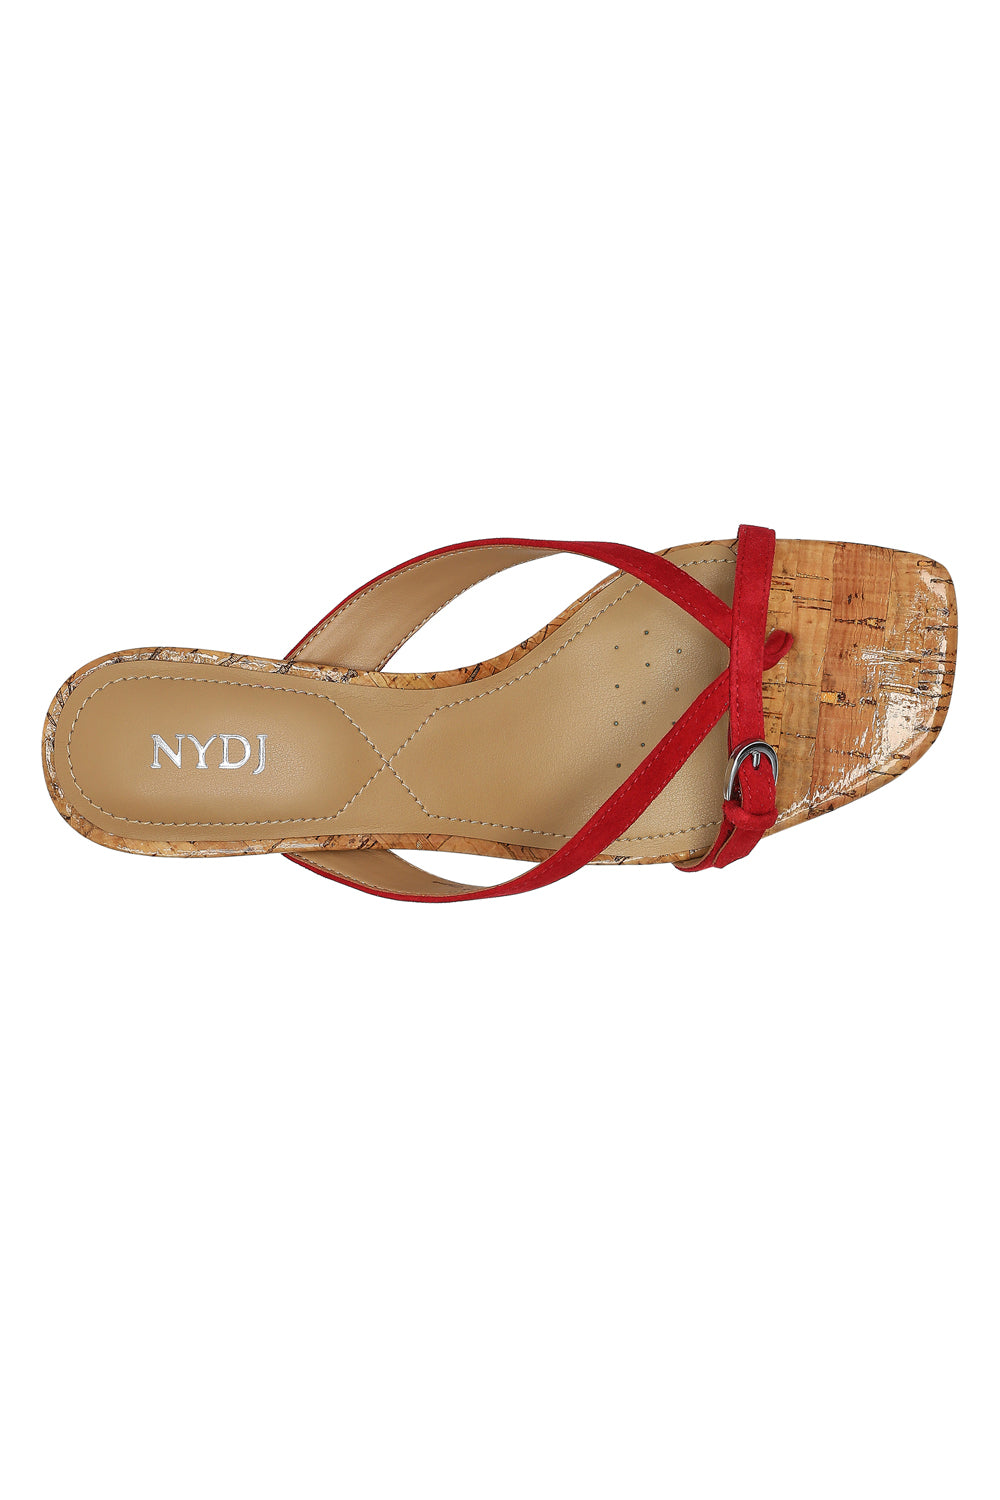 NYDJ Glam Block Heel Sandals In Wide Width In Kid Suede And Cork - Red